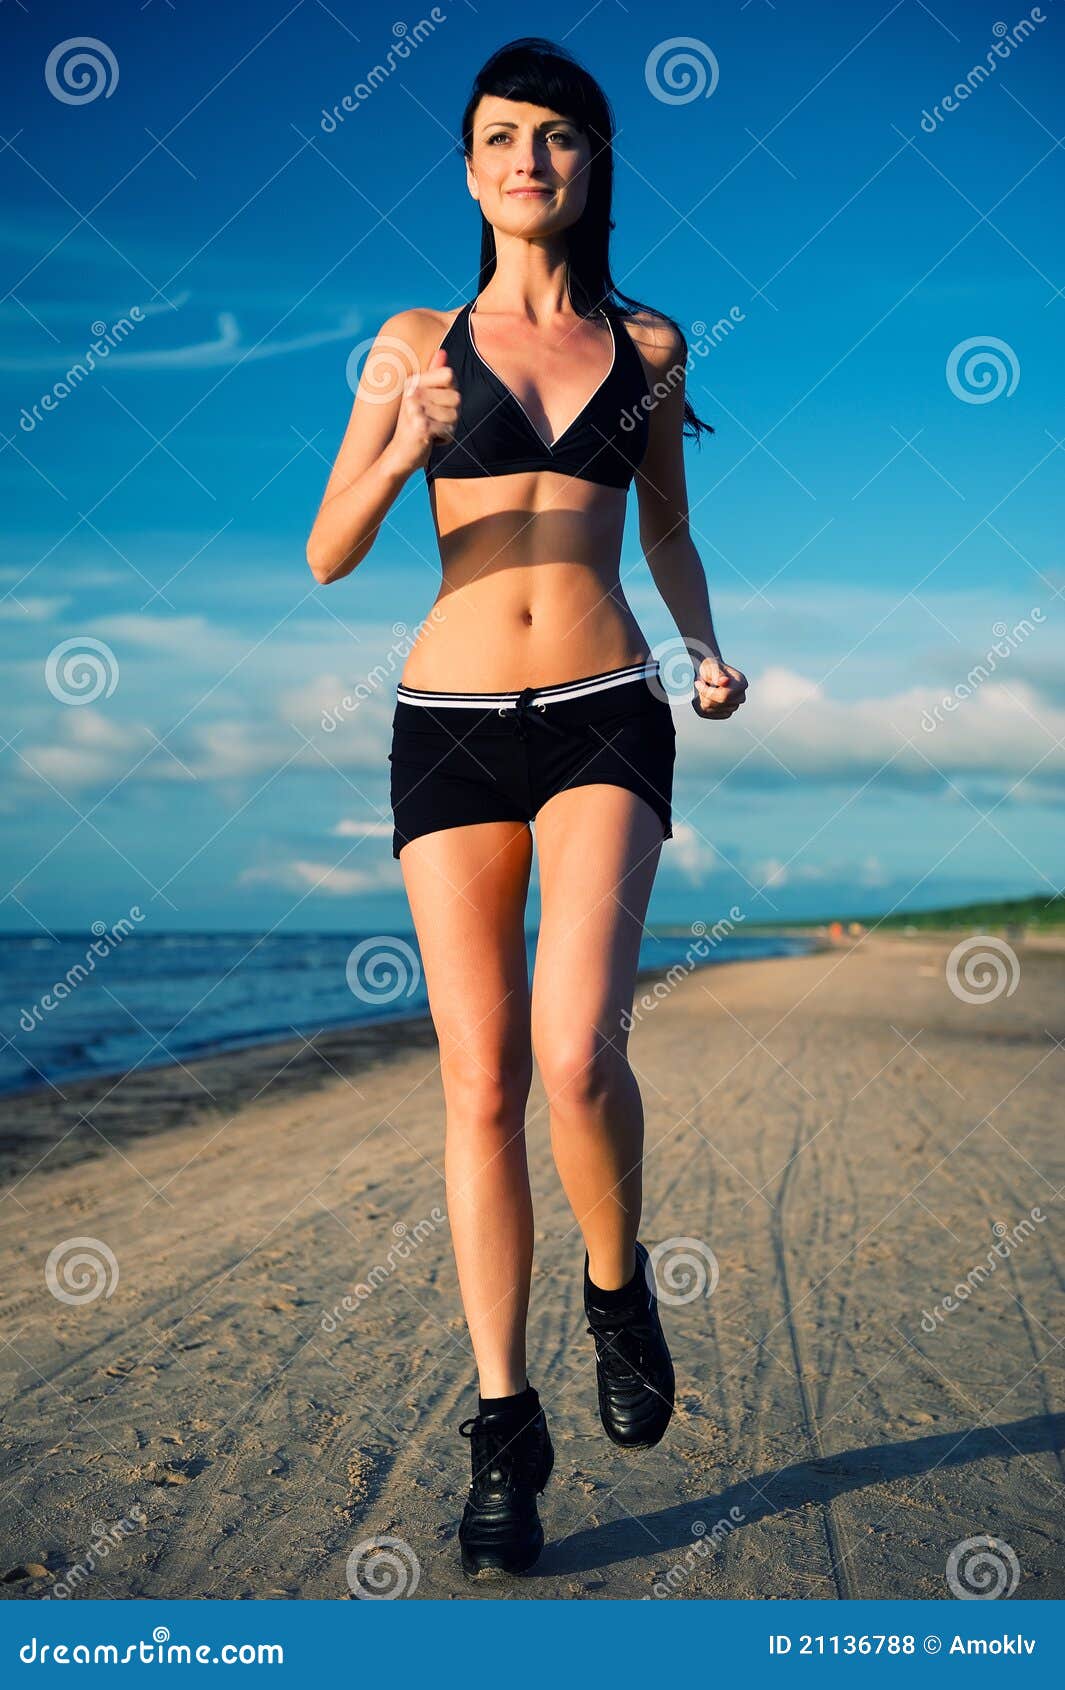 woman-jogging-beach-21136788.jpg